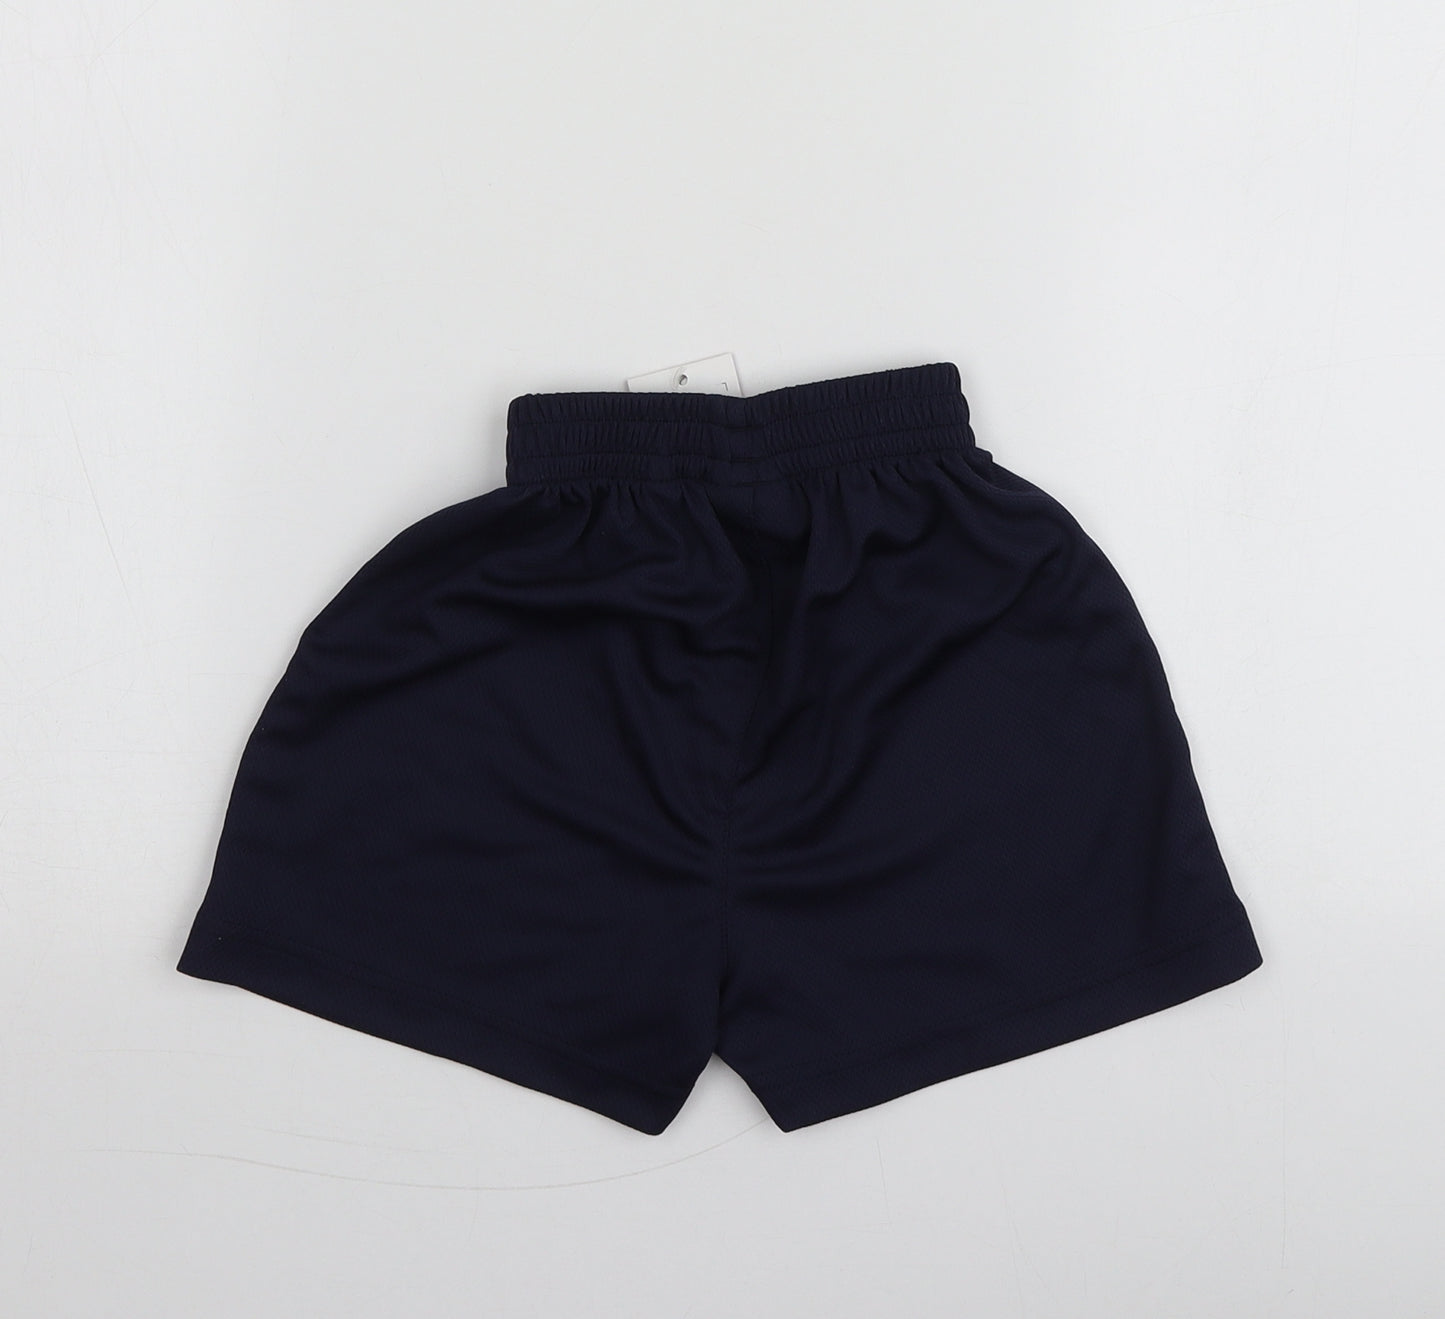 Akoa Boys Blue  100% Polyester Sweat Shorts Size 3-4 Years  Regular